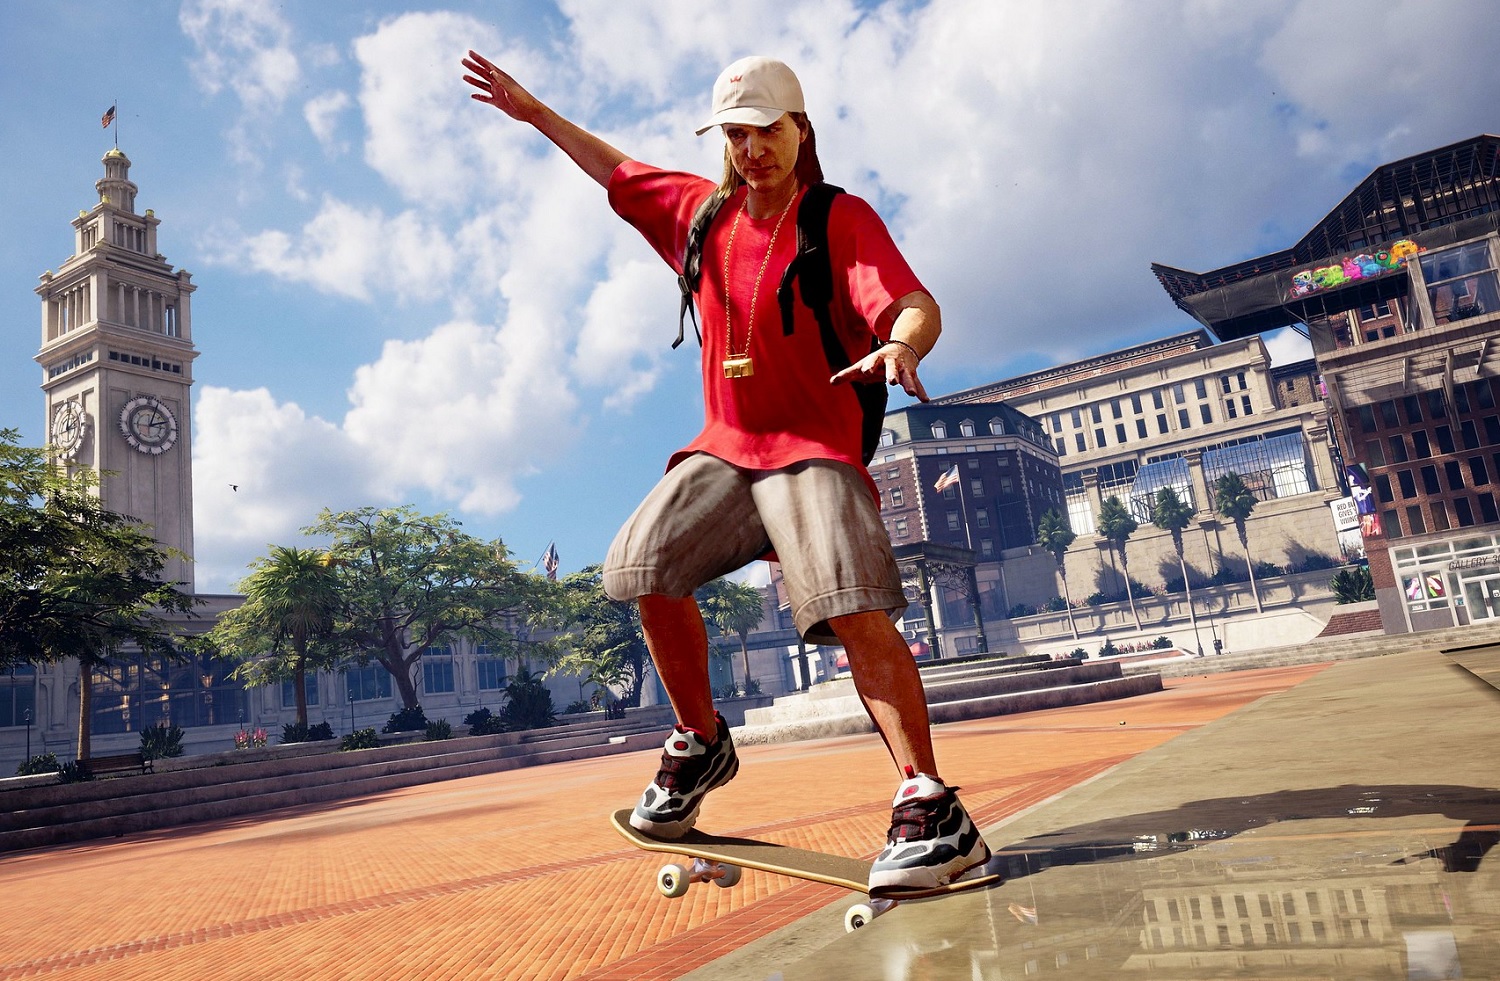 Skate 3 announced for PlayStation 3, Xbox 360 – Destructoid